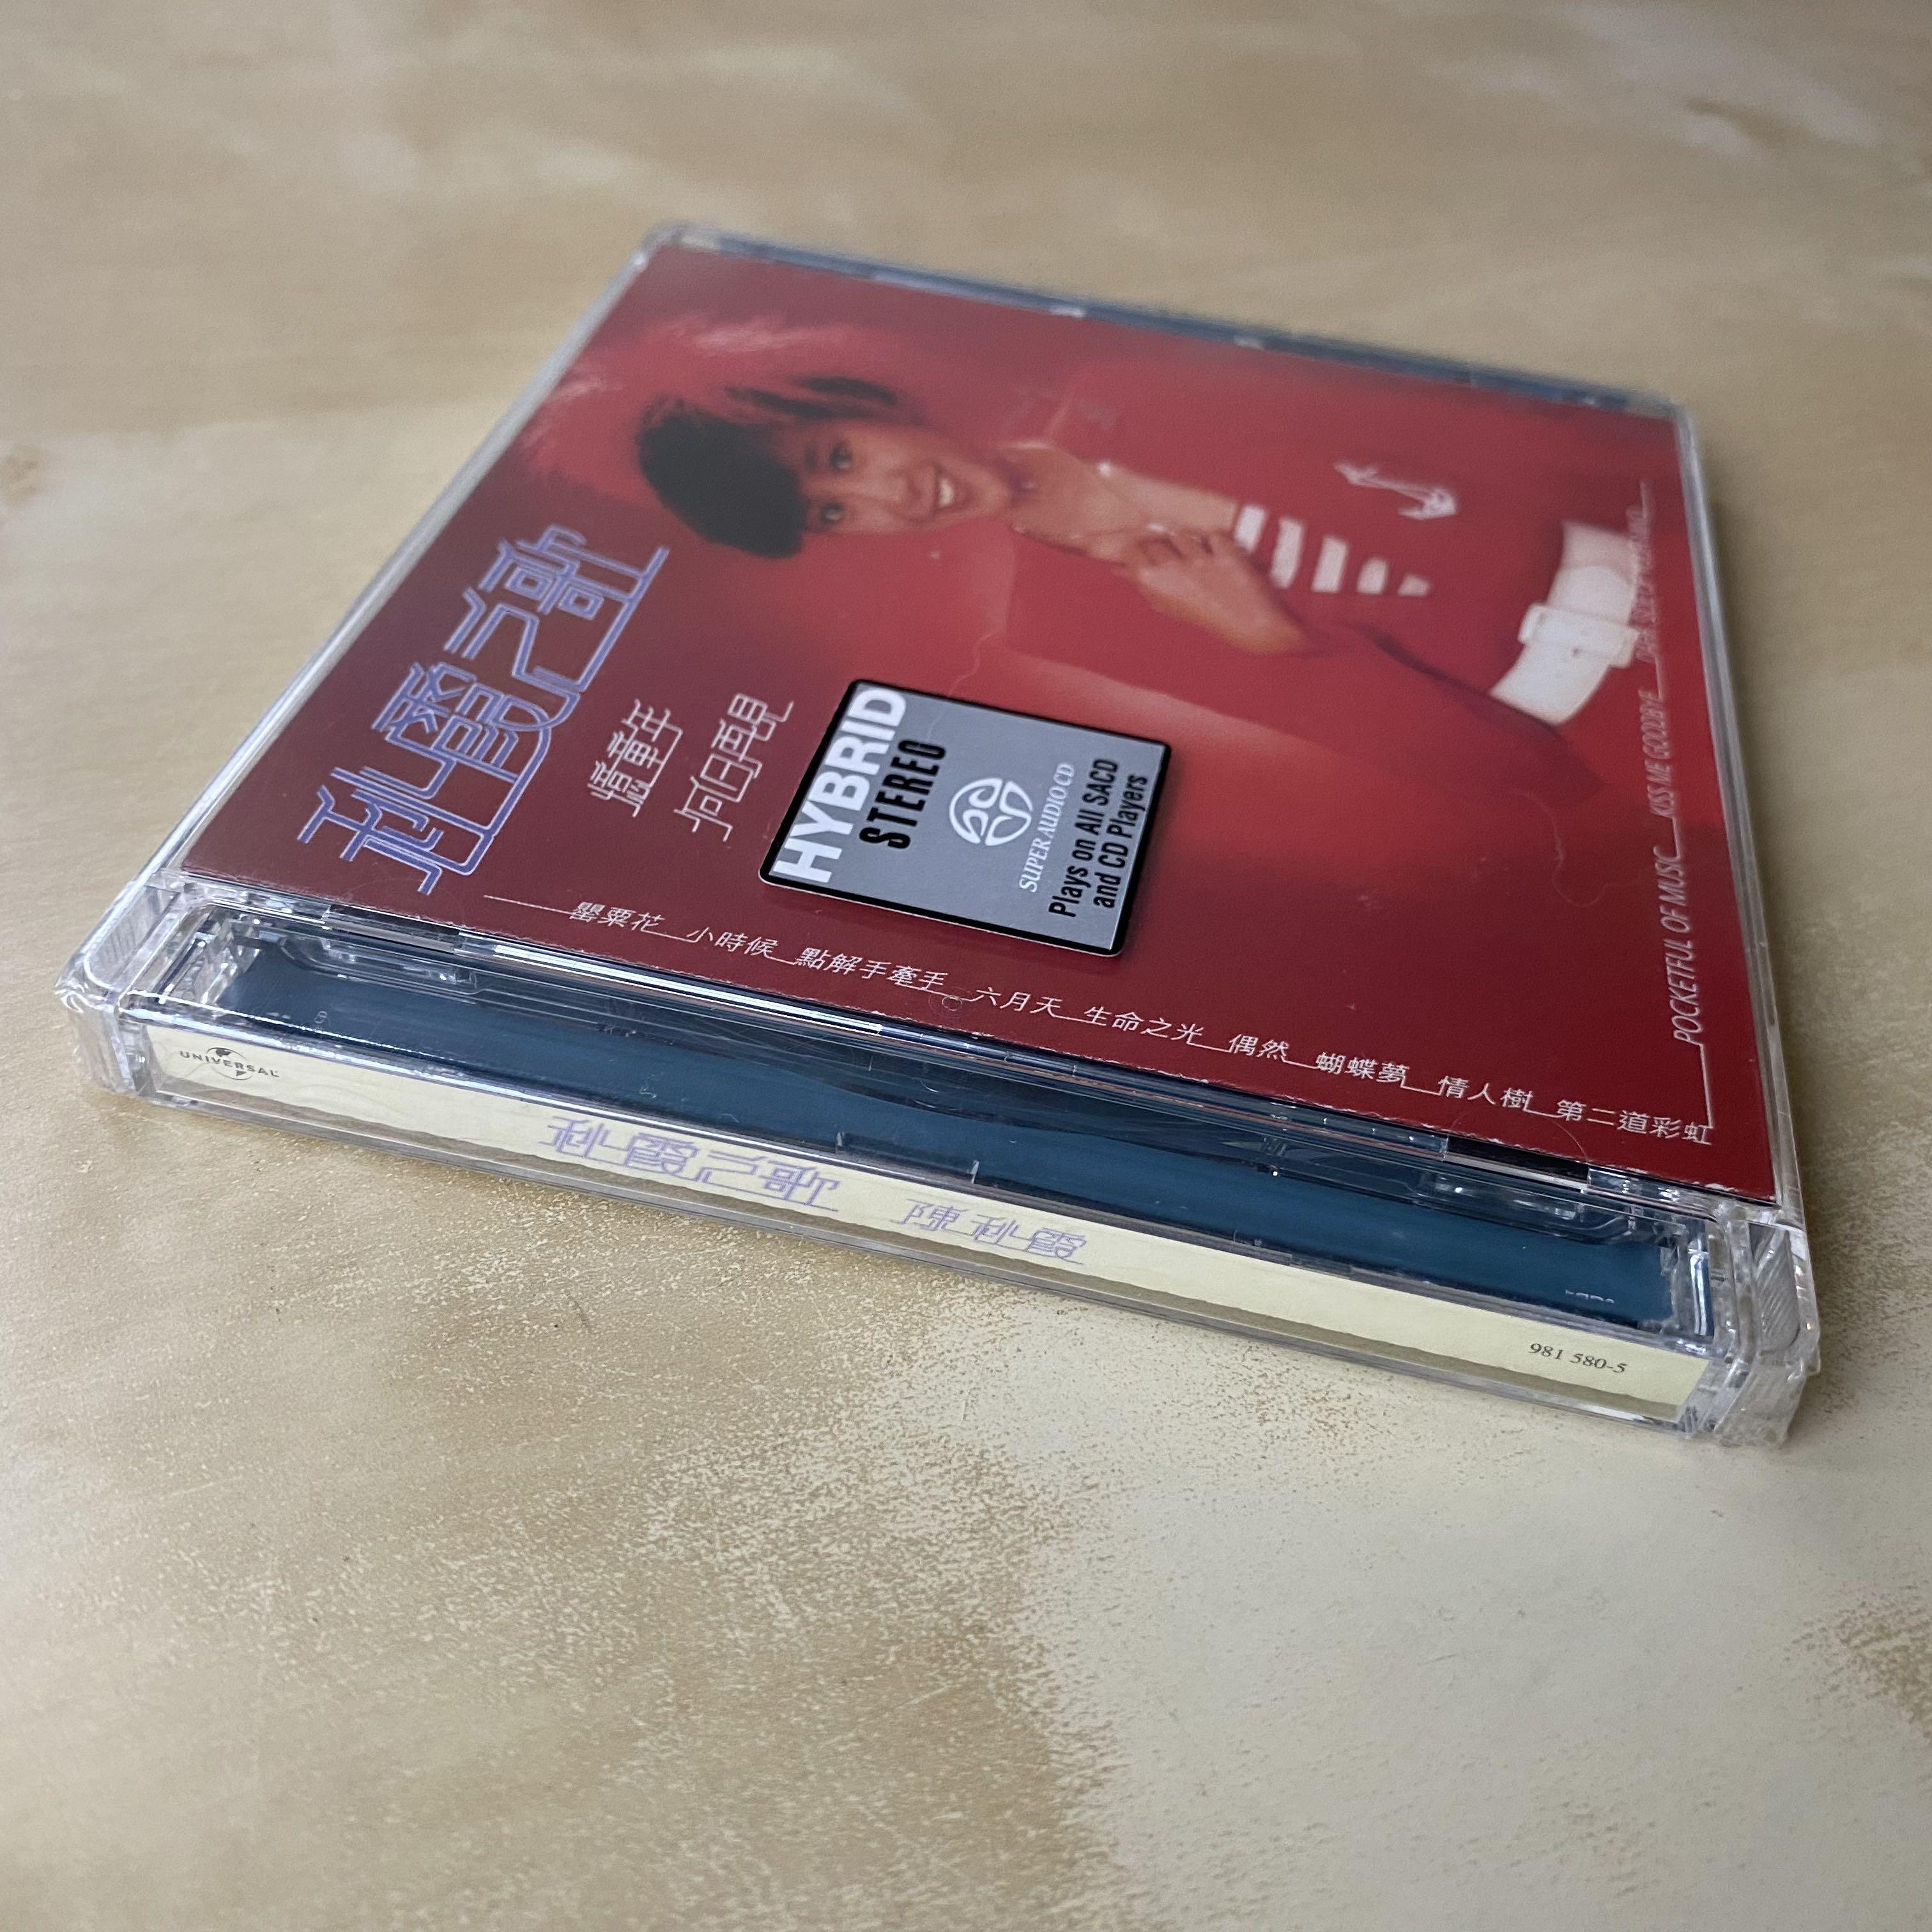 CD丨陳秋霞秋霞之歌/ Chelsia Chan Chelsia's Songs (SACD) 日本壓制 